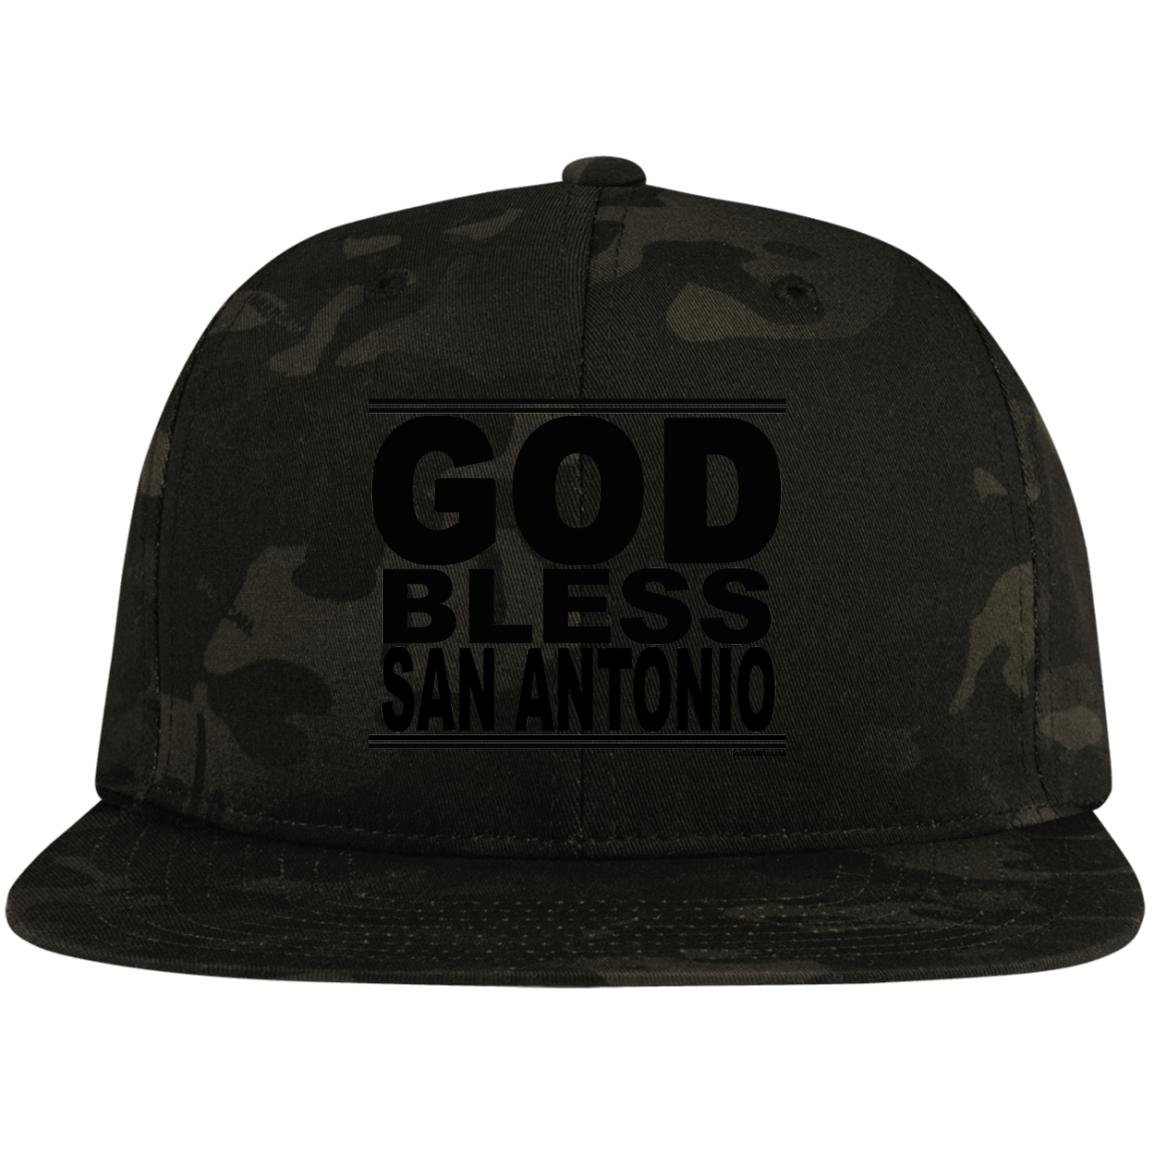 #GodBlessSanAntonio - Snapback Hat